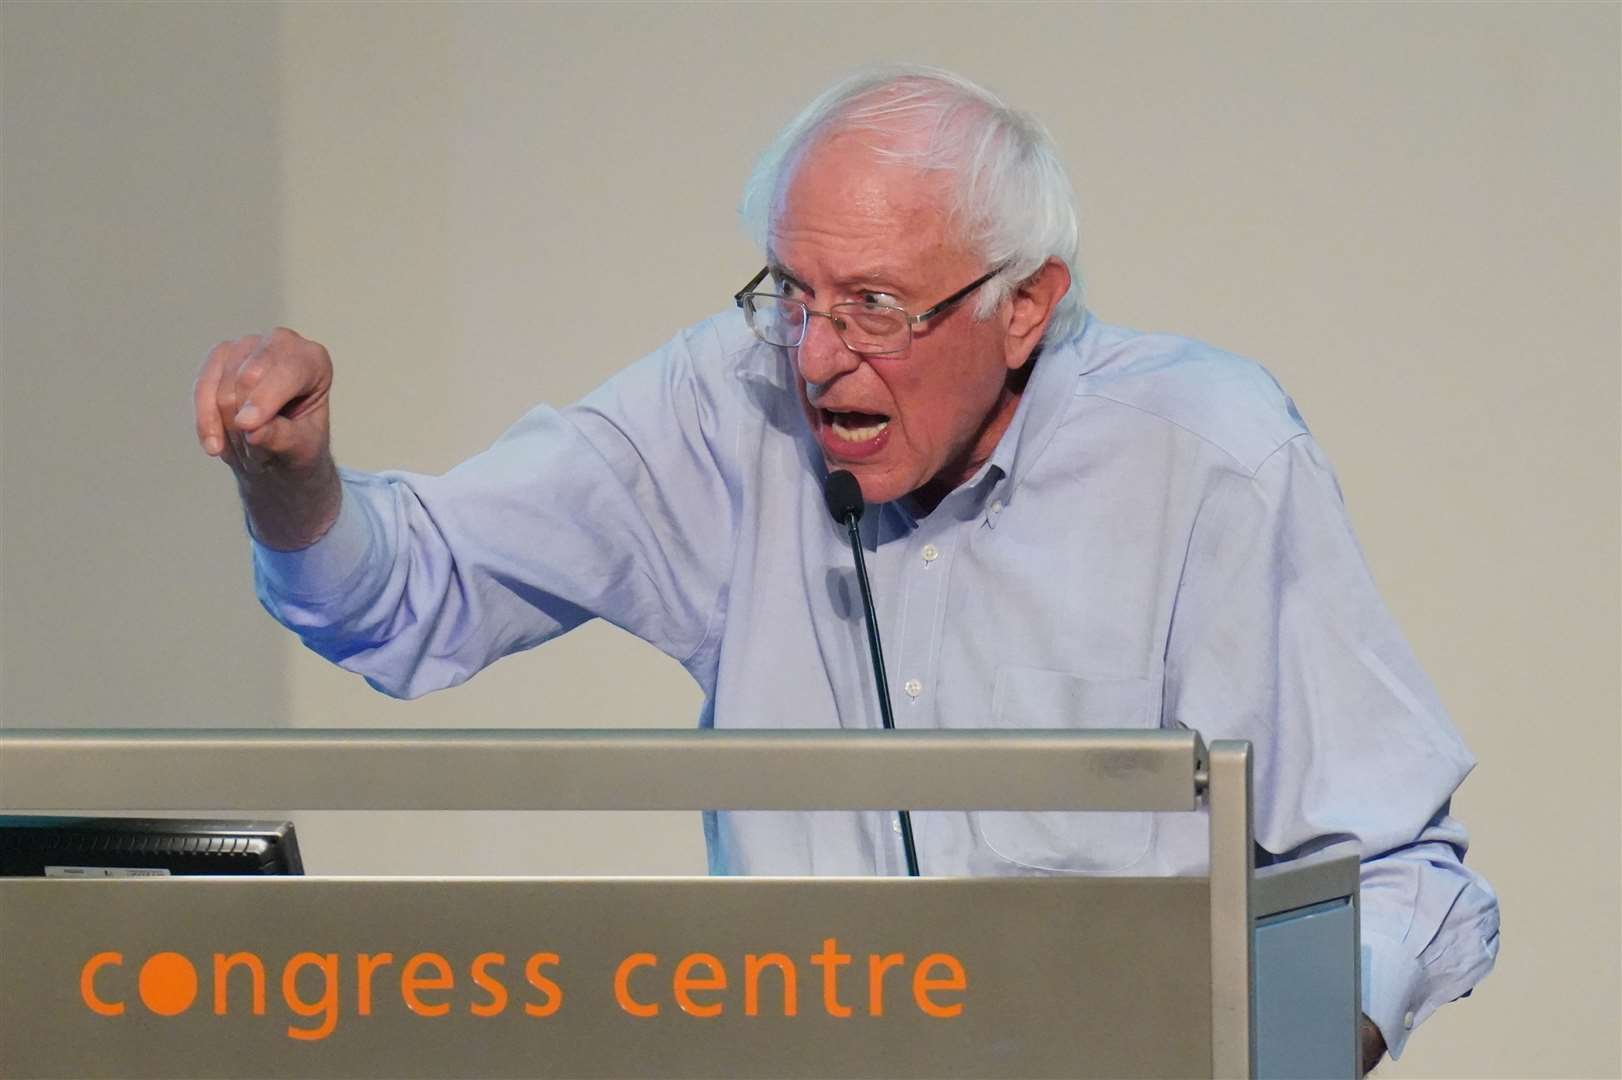 US senator Bernie Sanders speaking during a rally at Congress House, London (Jonathan Brady/PA)